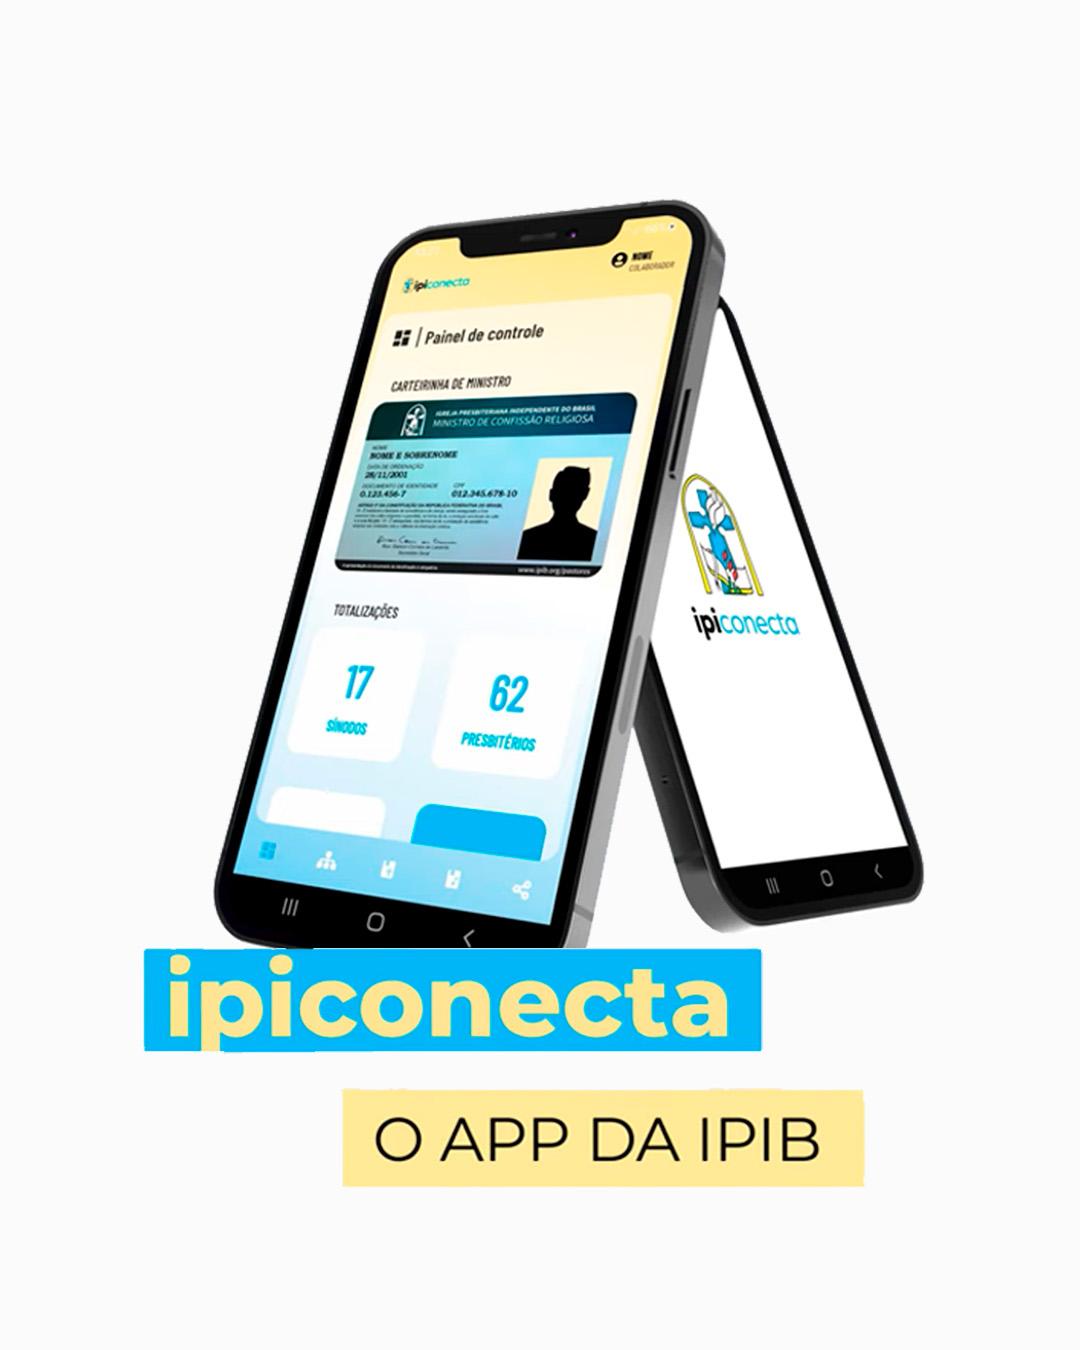 ipiconecta – o app da IPIB